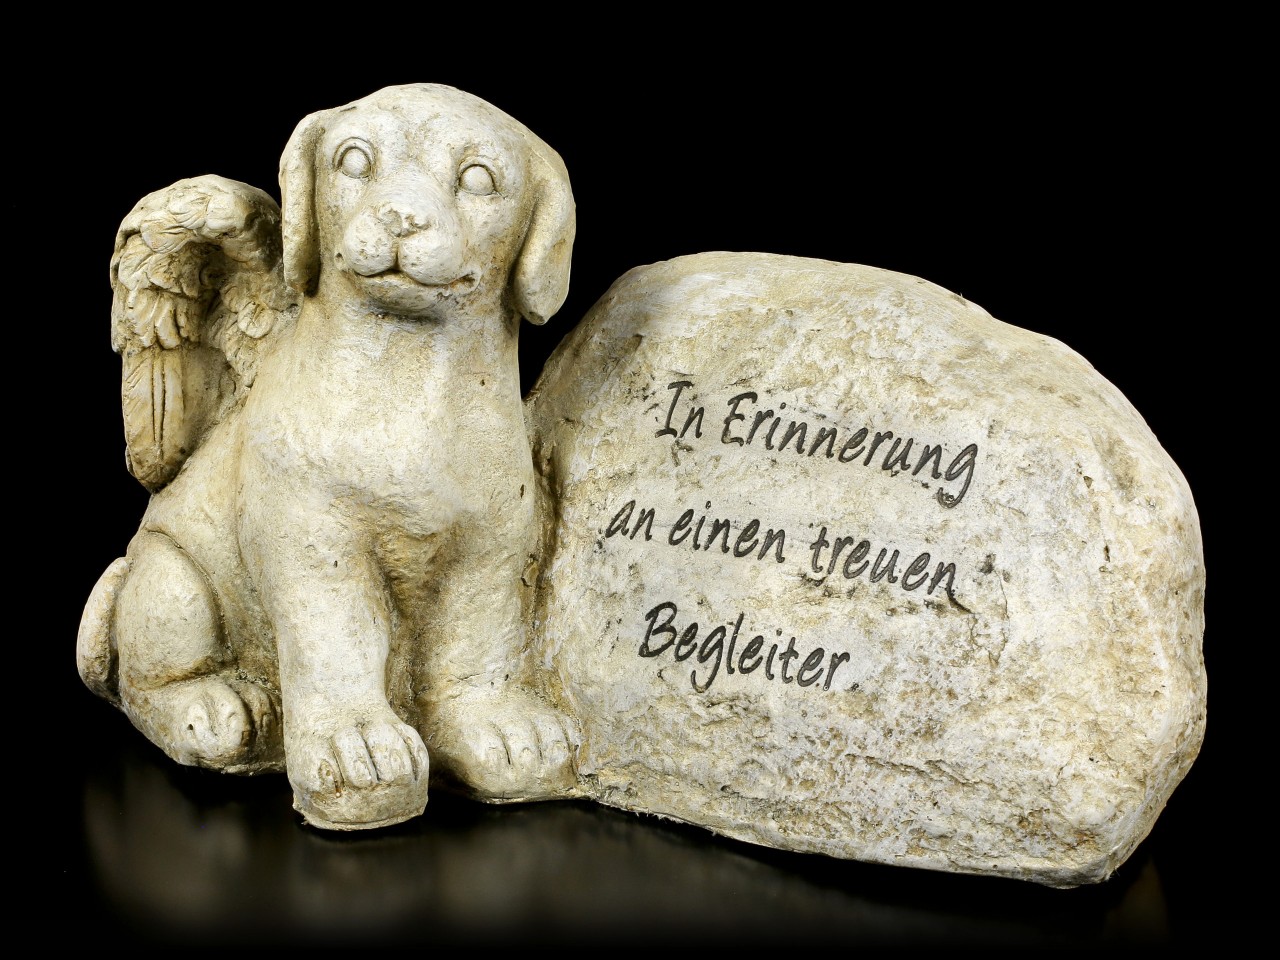 Dog Angel Figurine next to Tombstone